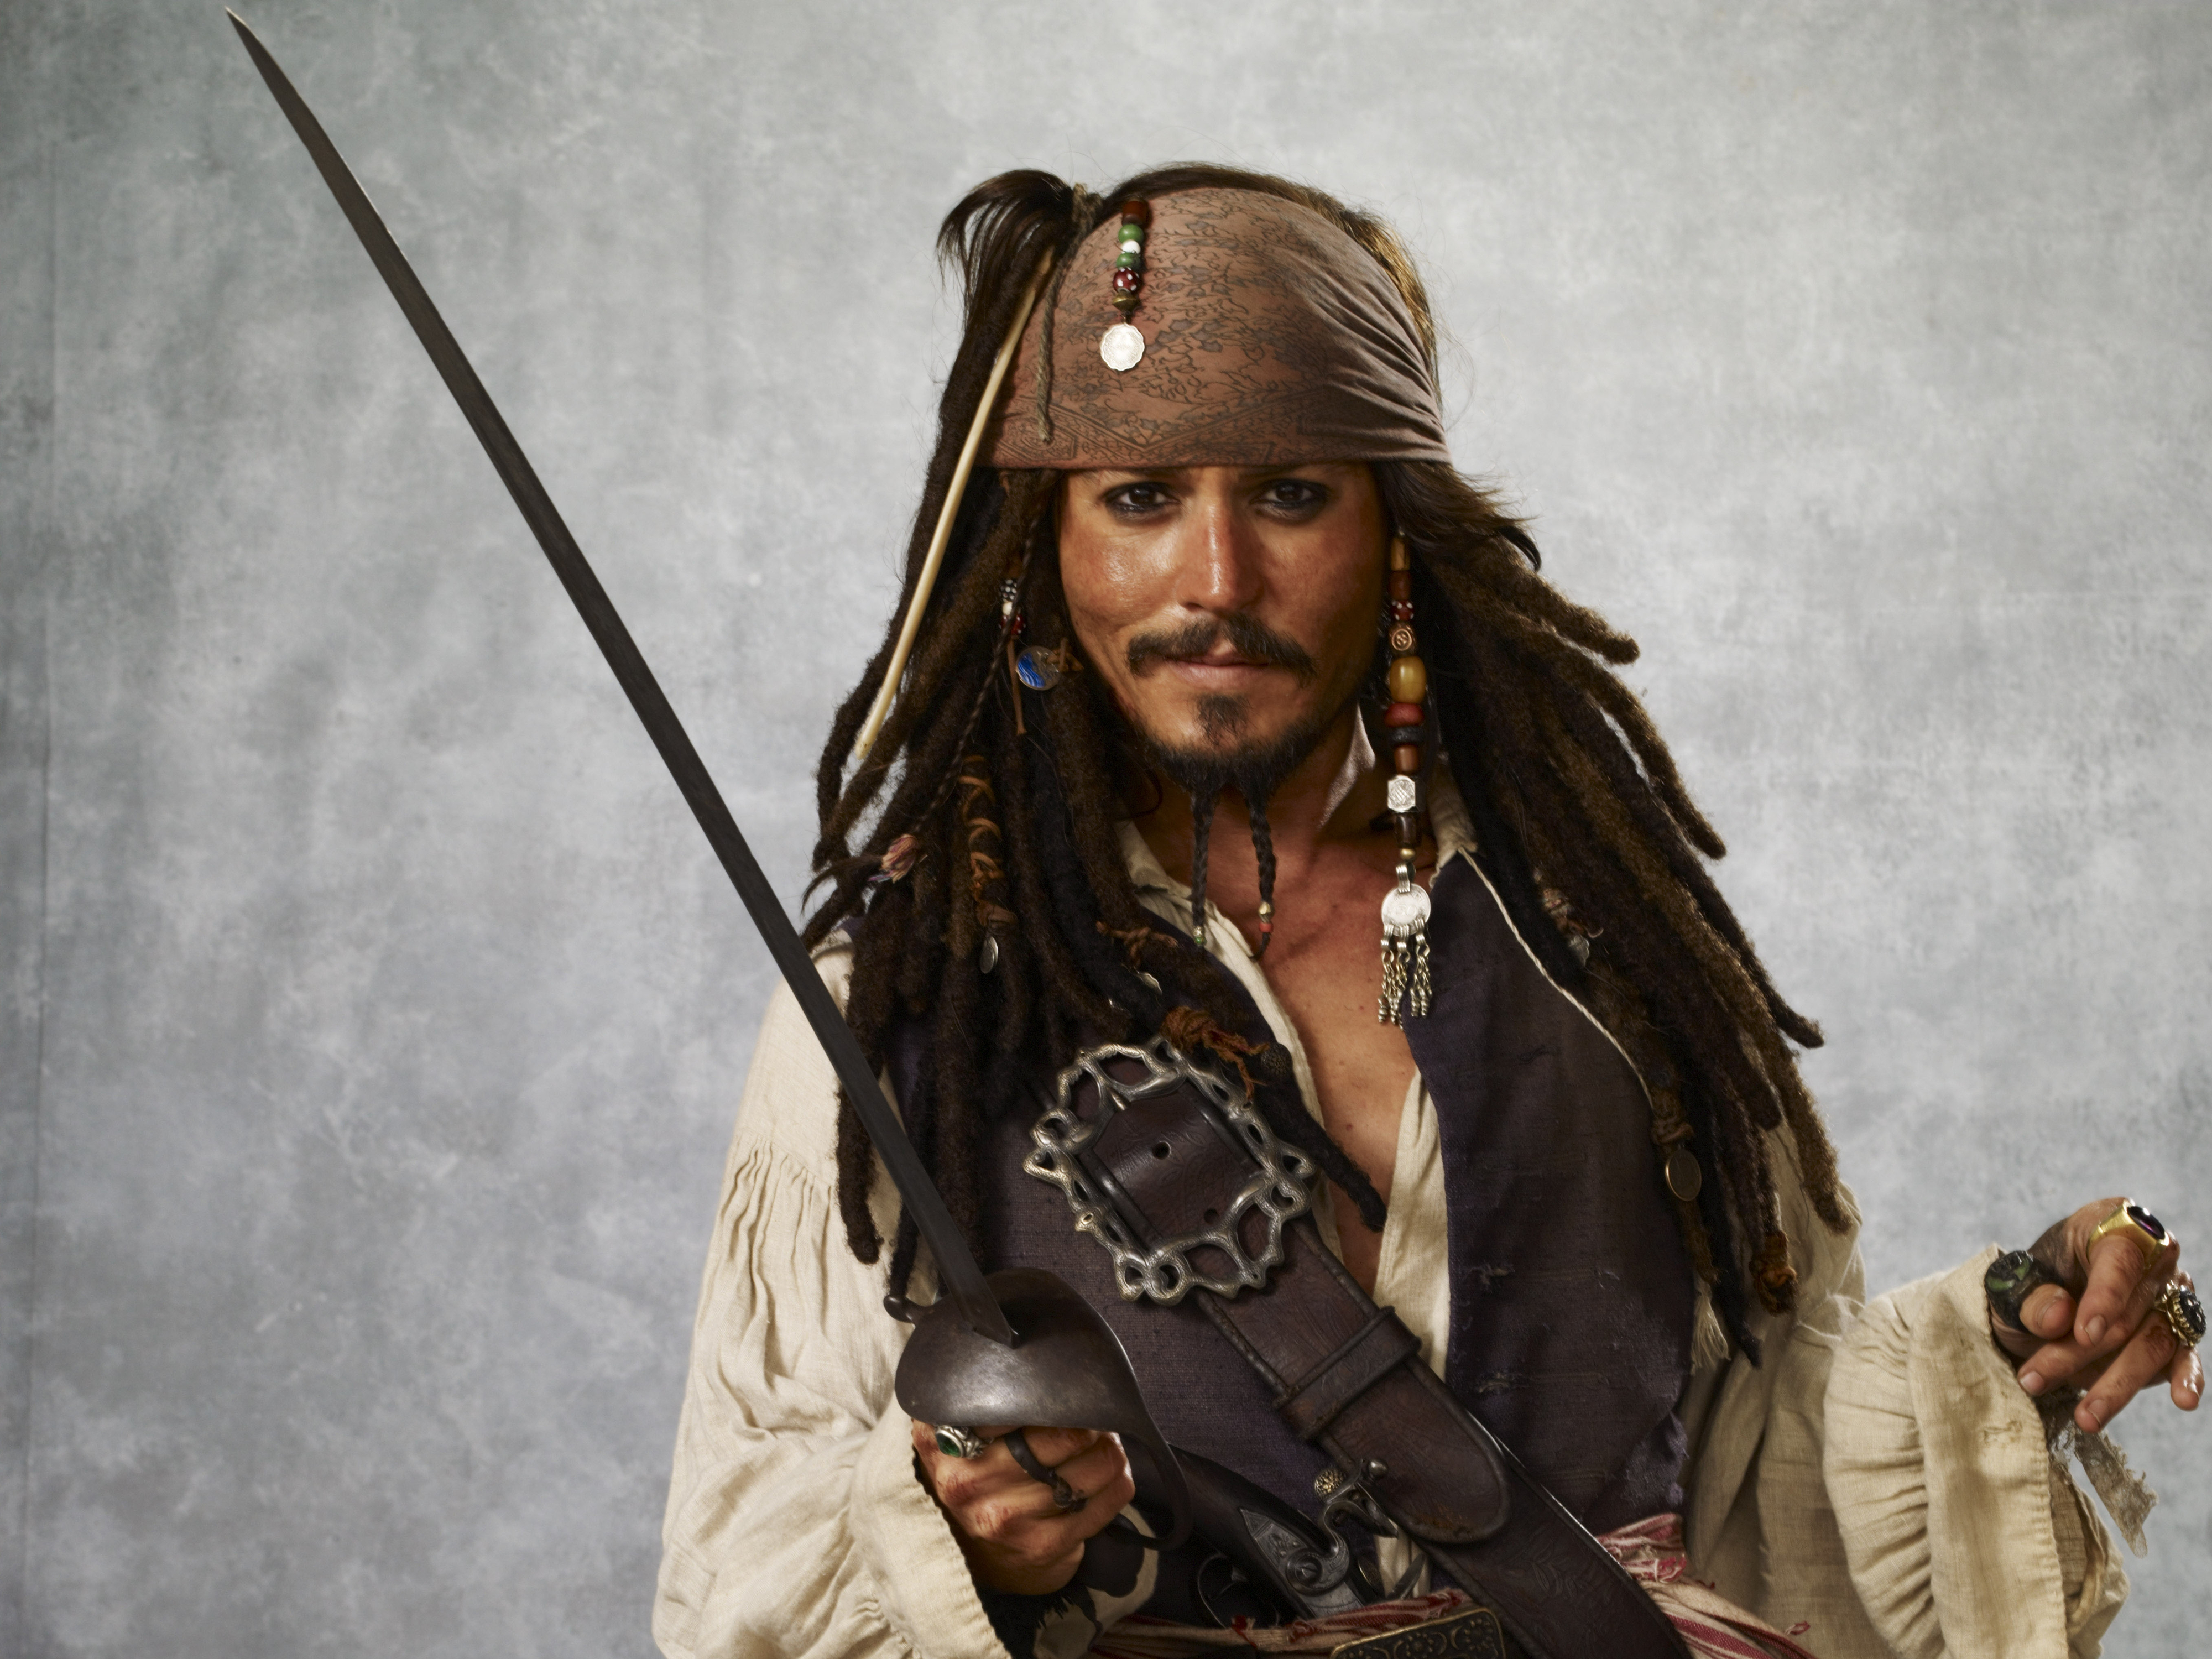 jack sparrow, johnny depp, movie, pirates of the caribbean, actor, beard, long hair, pirate, sword